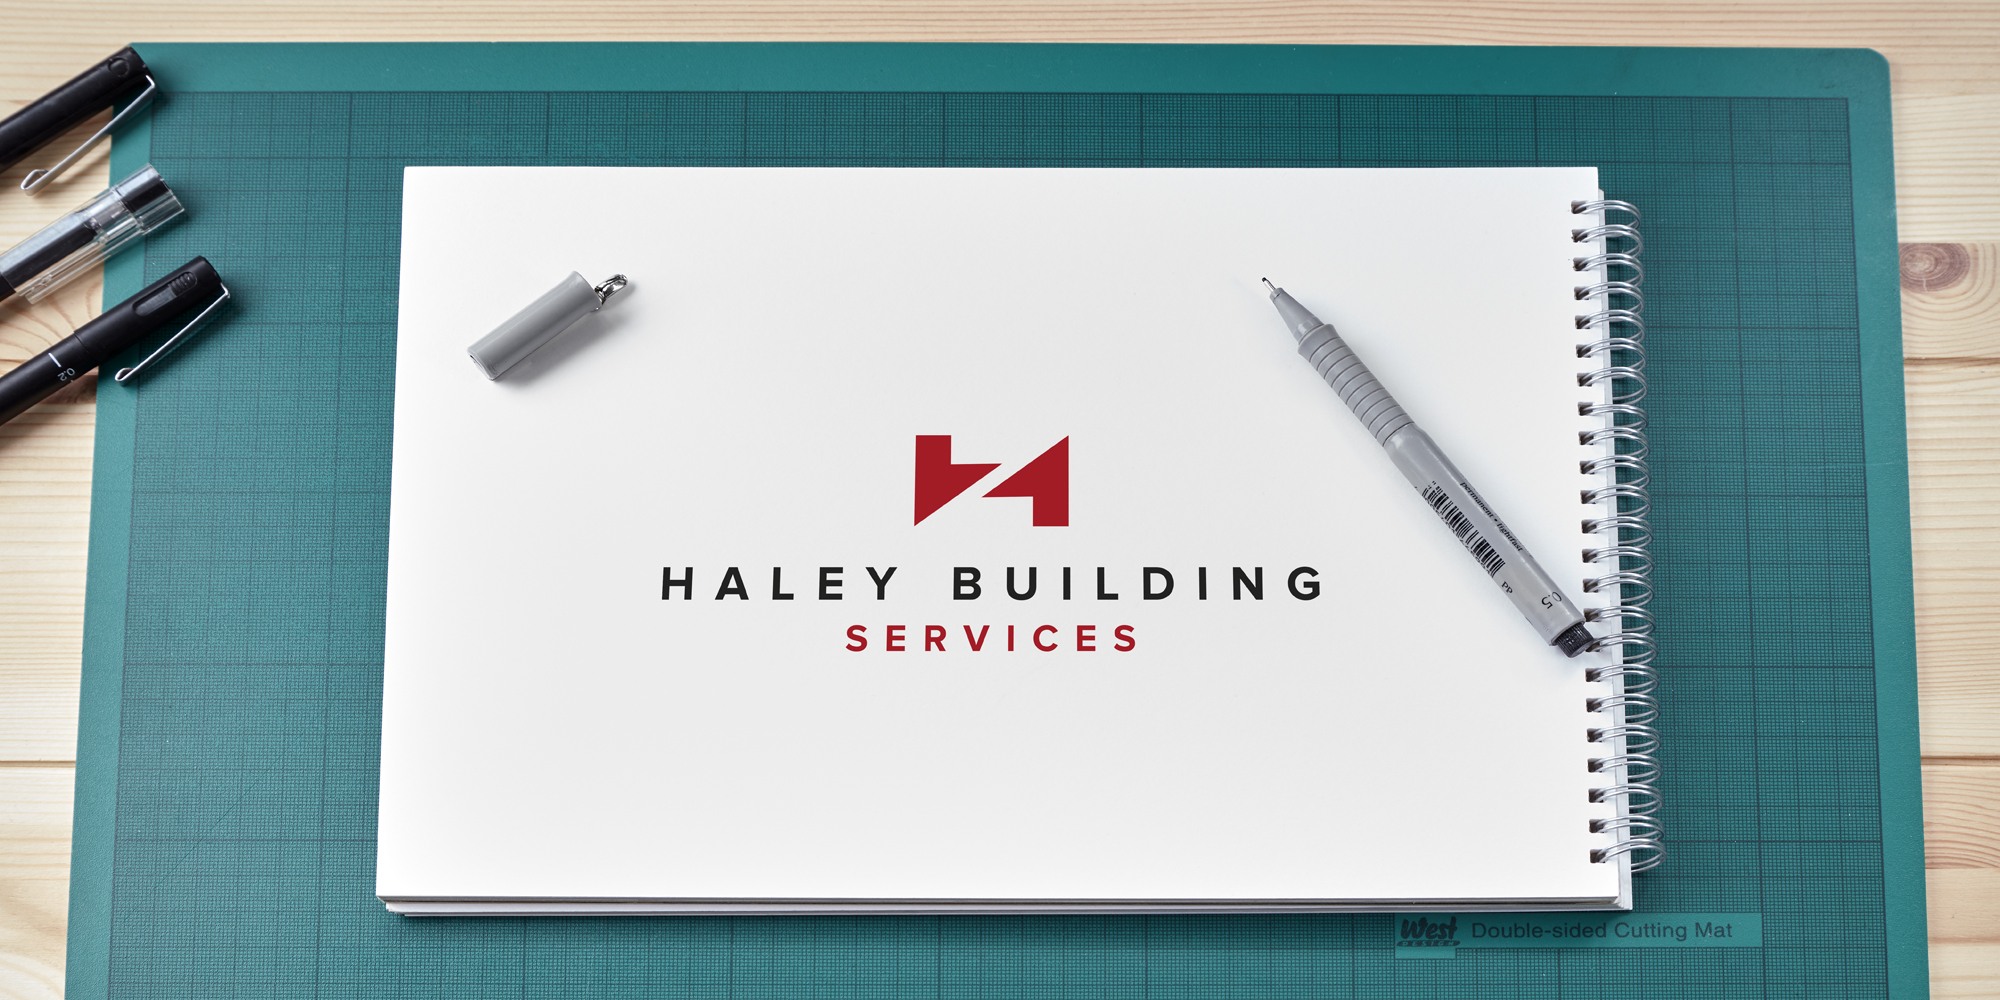 haley Building Services logo